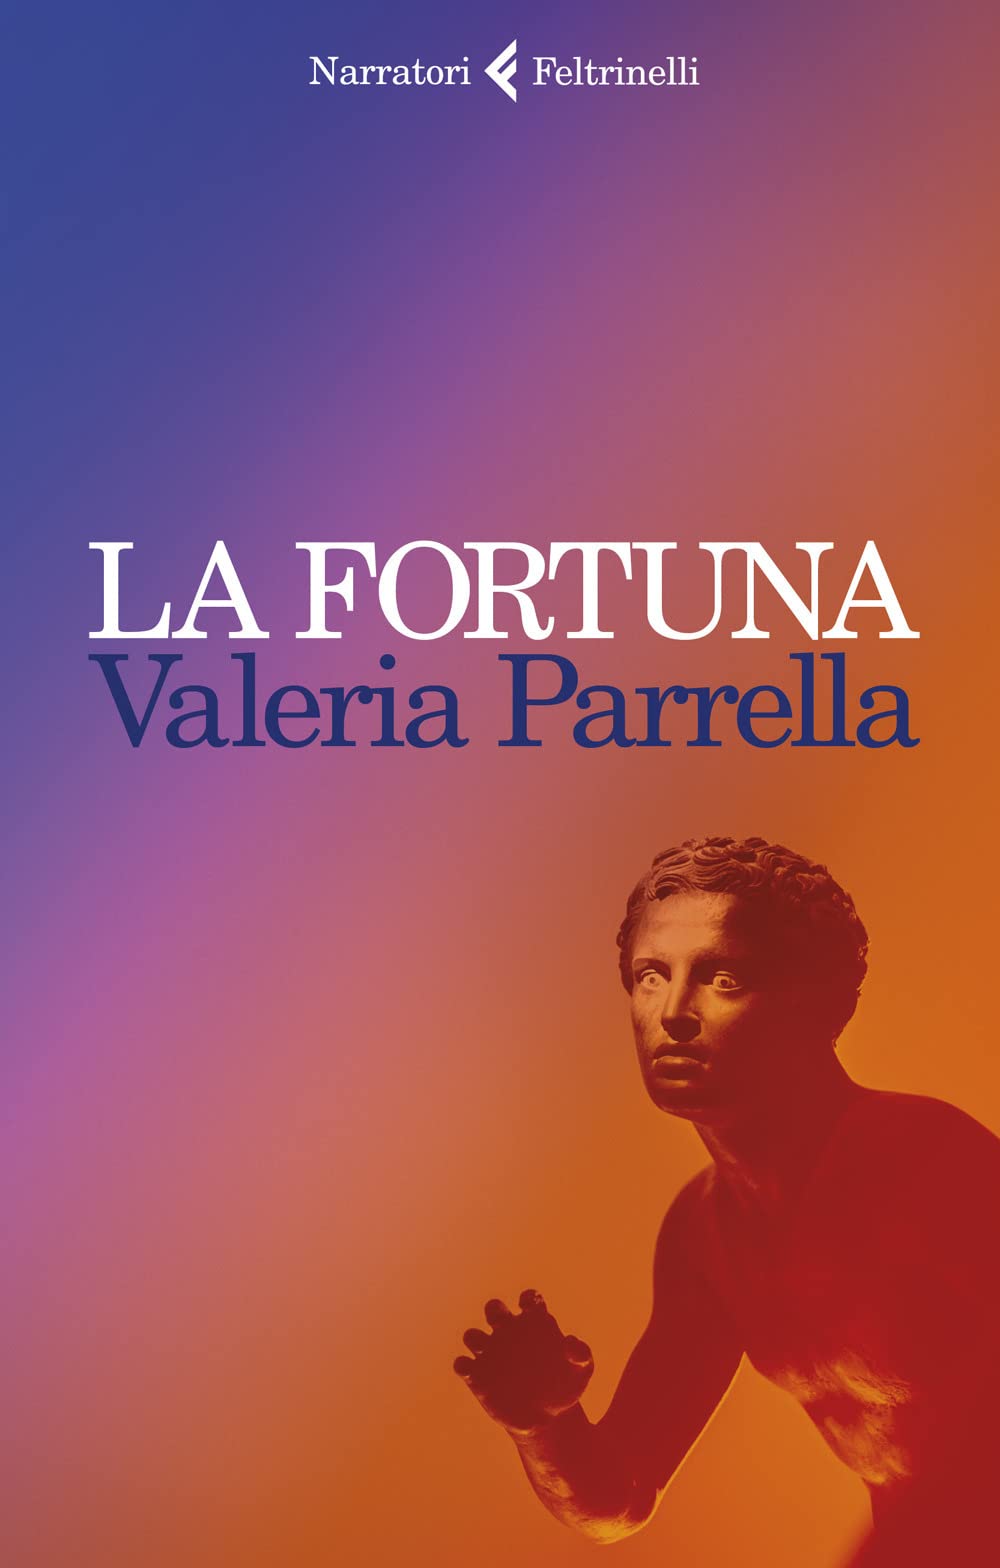 “La Fortuna” – Valeria Parrella